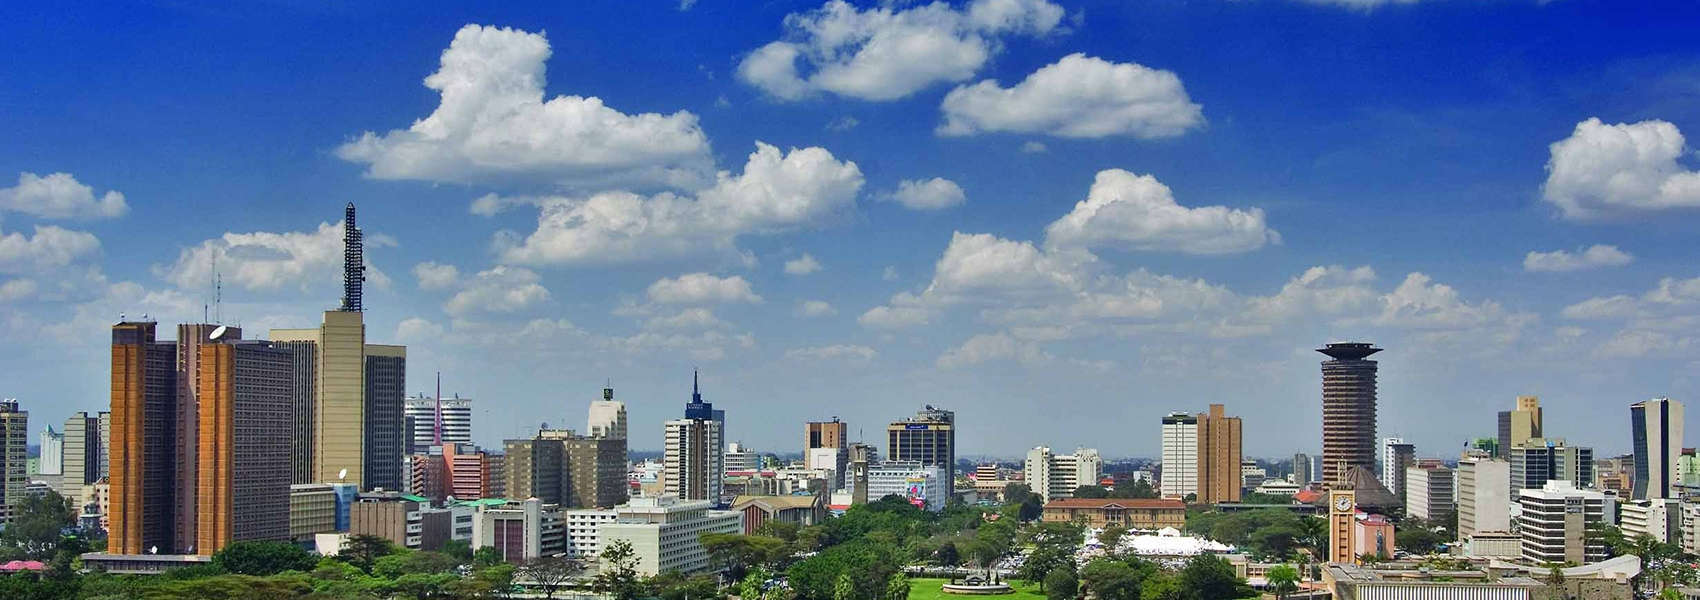 African Nairobi Safari city